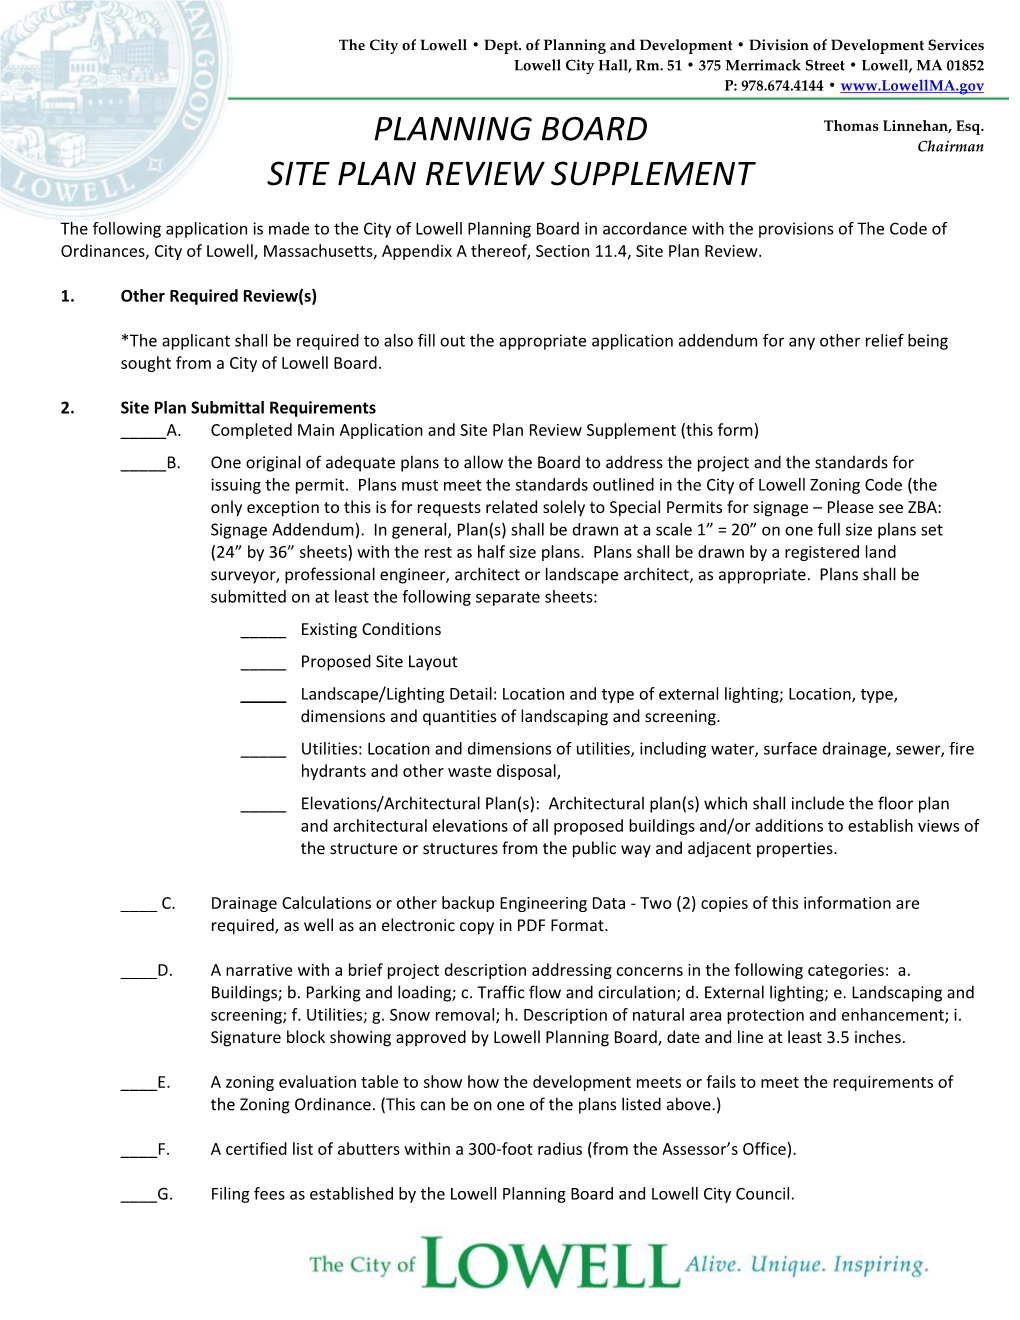 Planning Board Site Plan Review Supplement - DocsLib